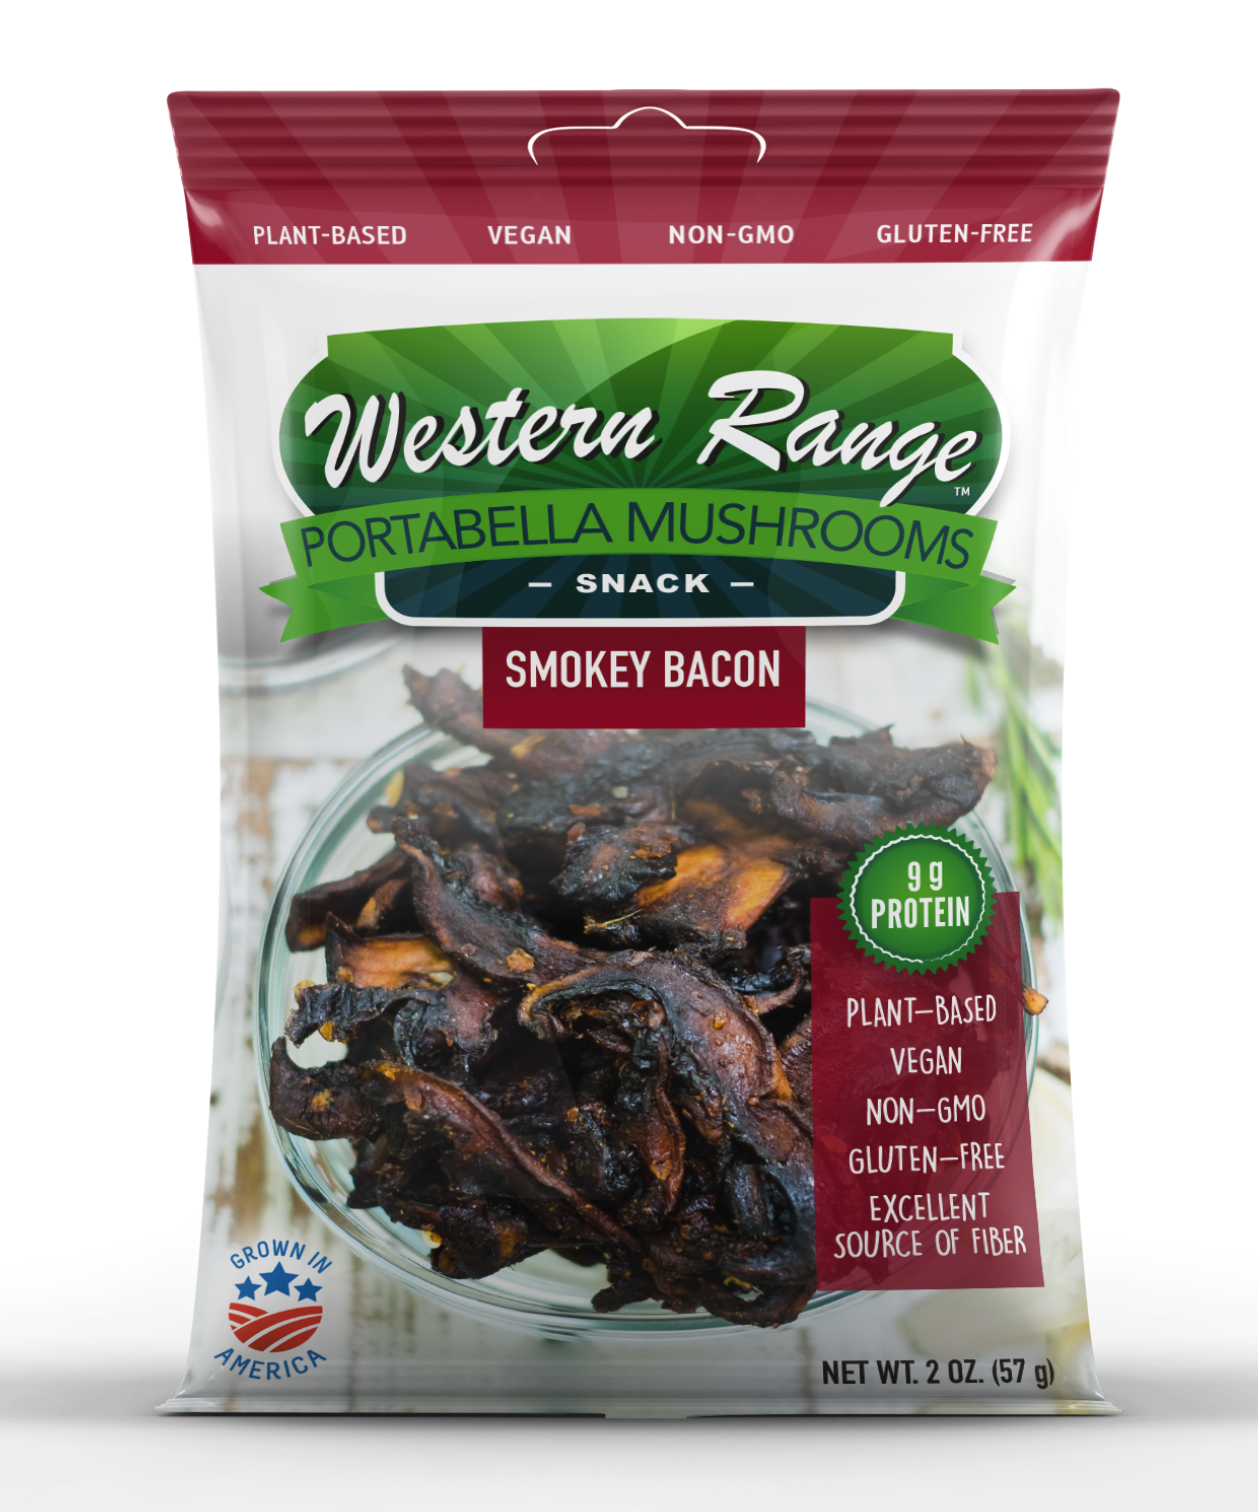 Western Range Portabella Mushroom Snack - Smokey Bacon 12 units per case 2.0 oz